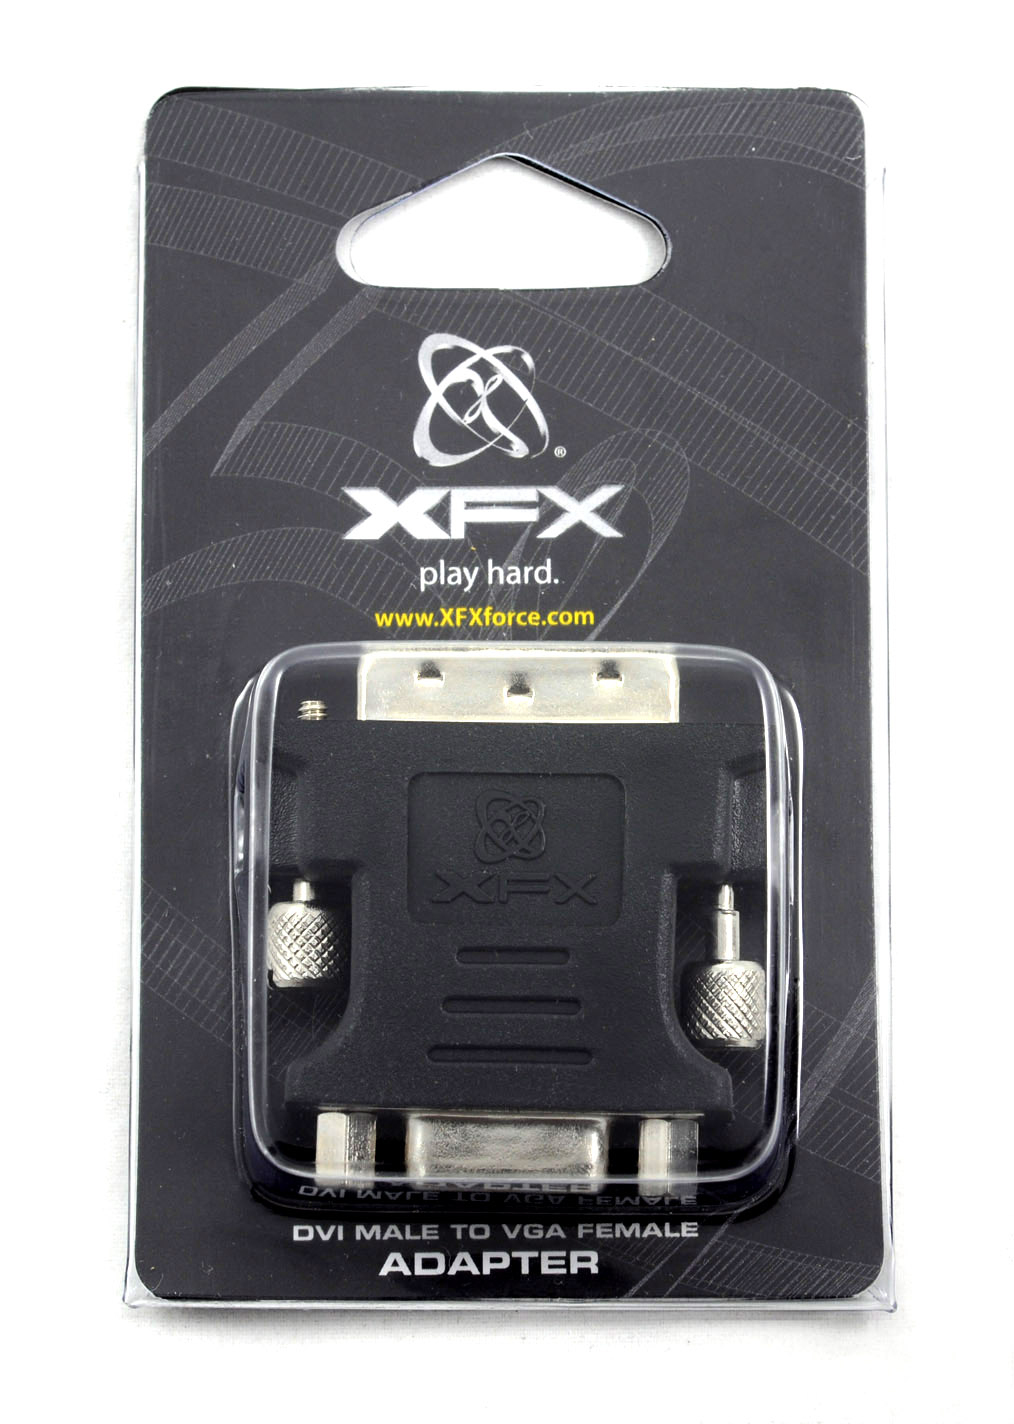 XFX DVI Male to VGA Female Adapter Model MA-AP01-DV1K